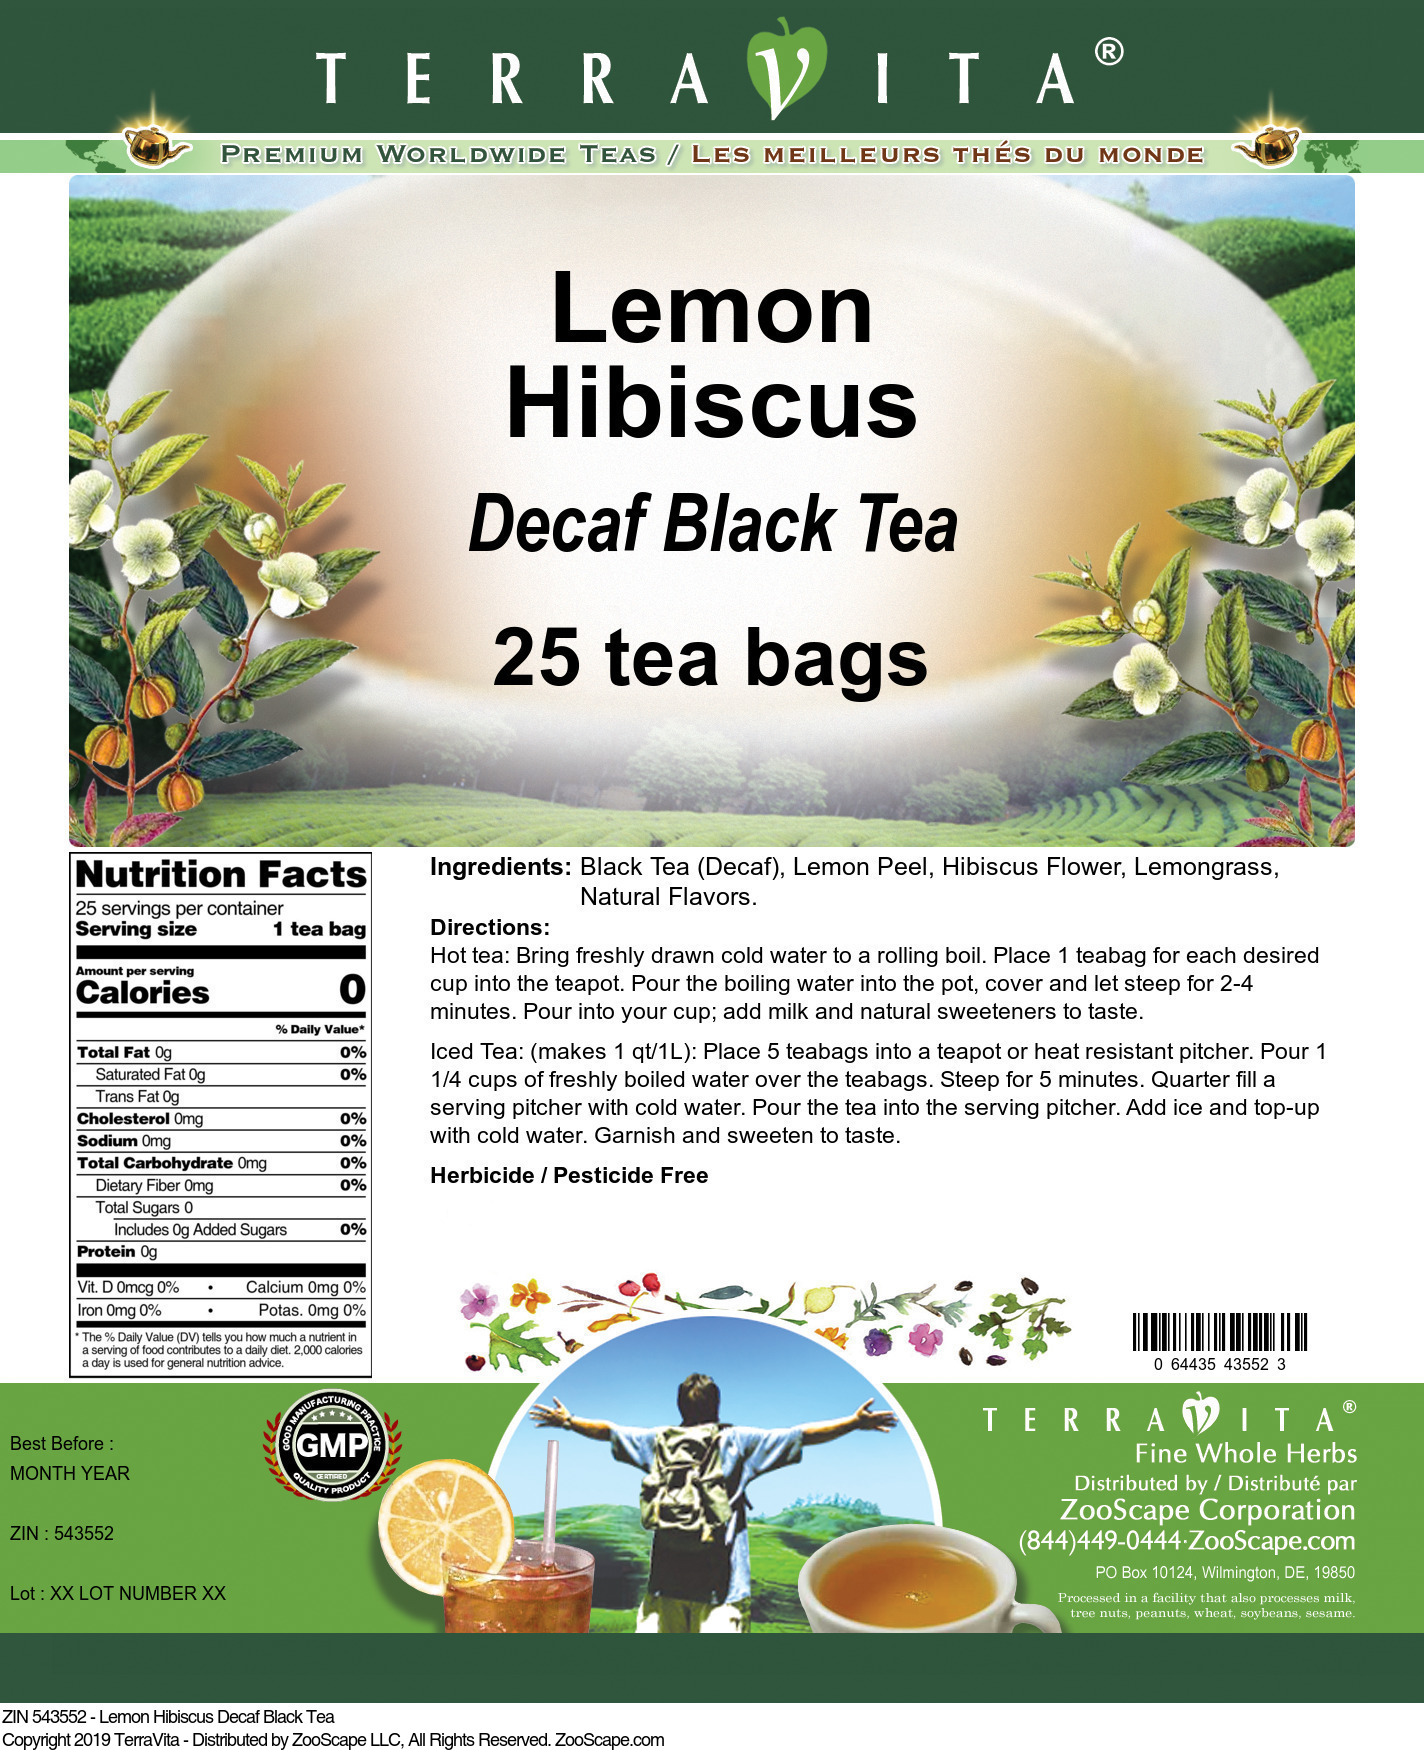 Lemon Hibiscus Decaf Black Tea - Label